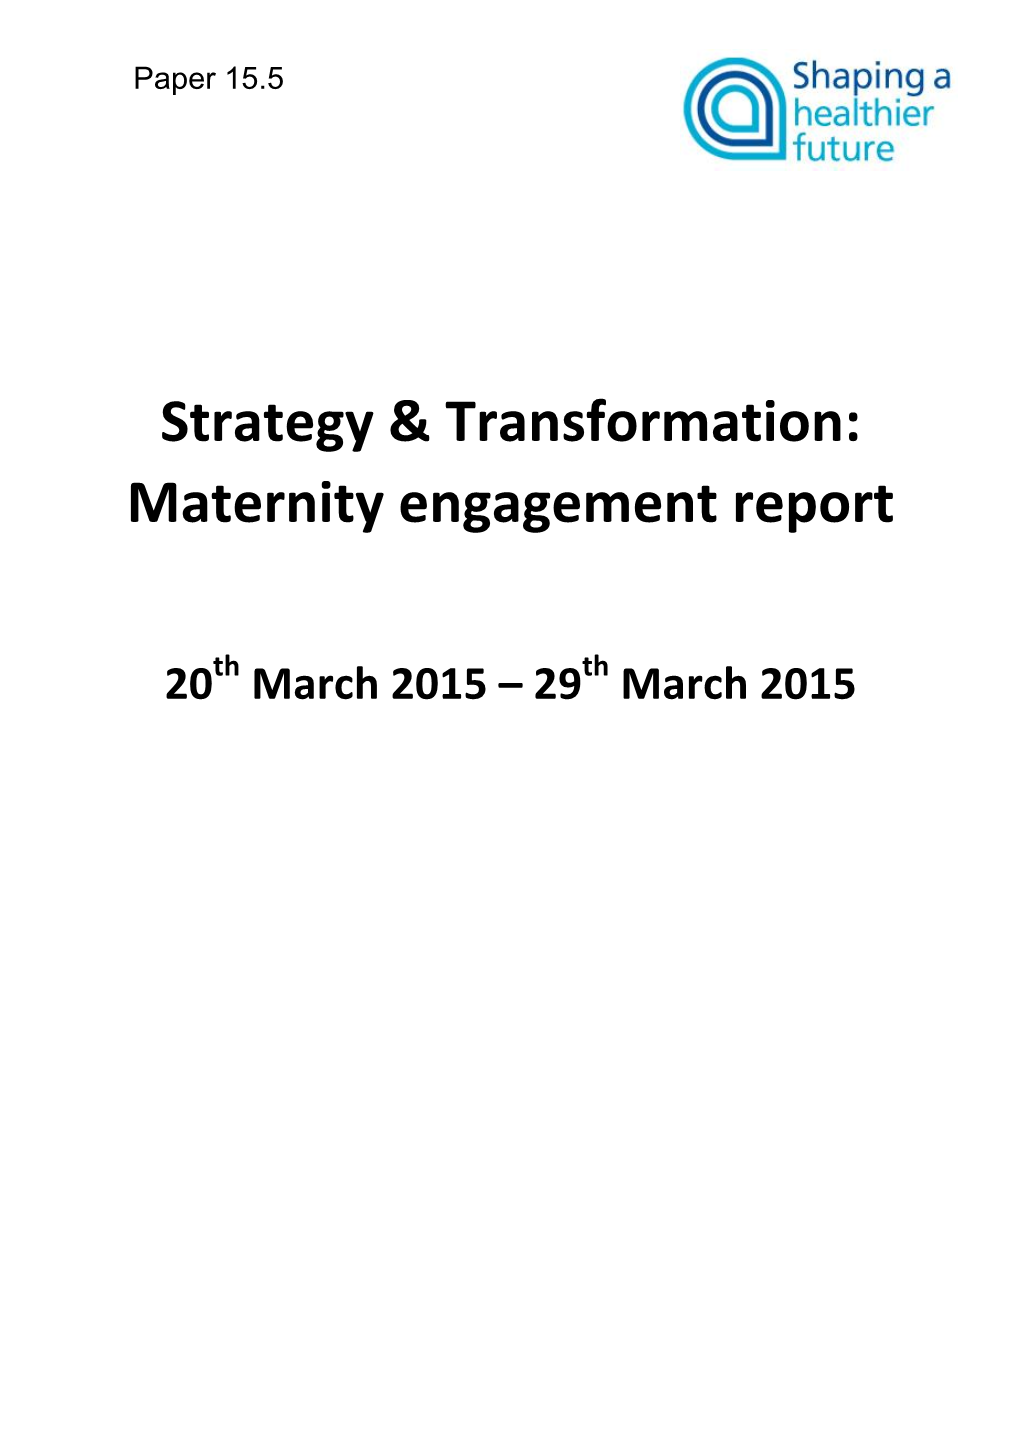 Maternity Engagement Report